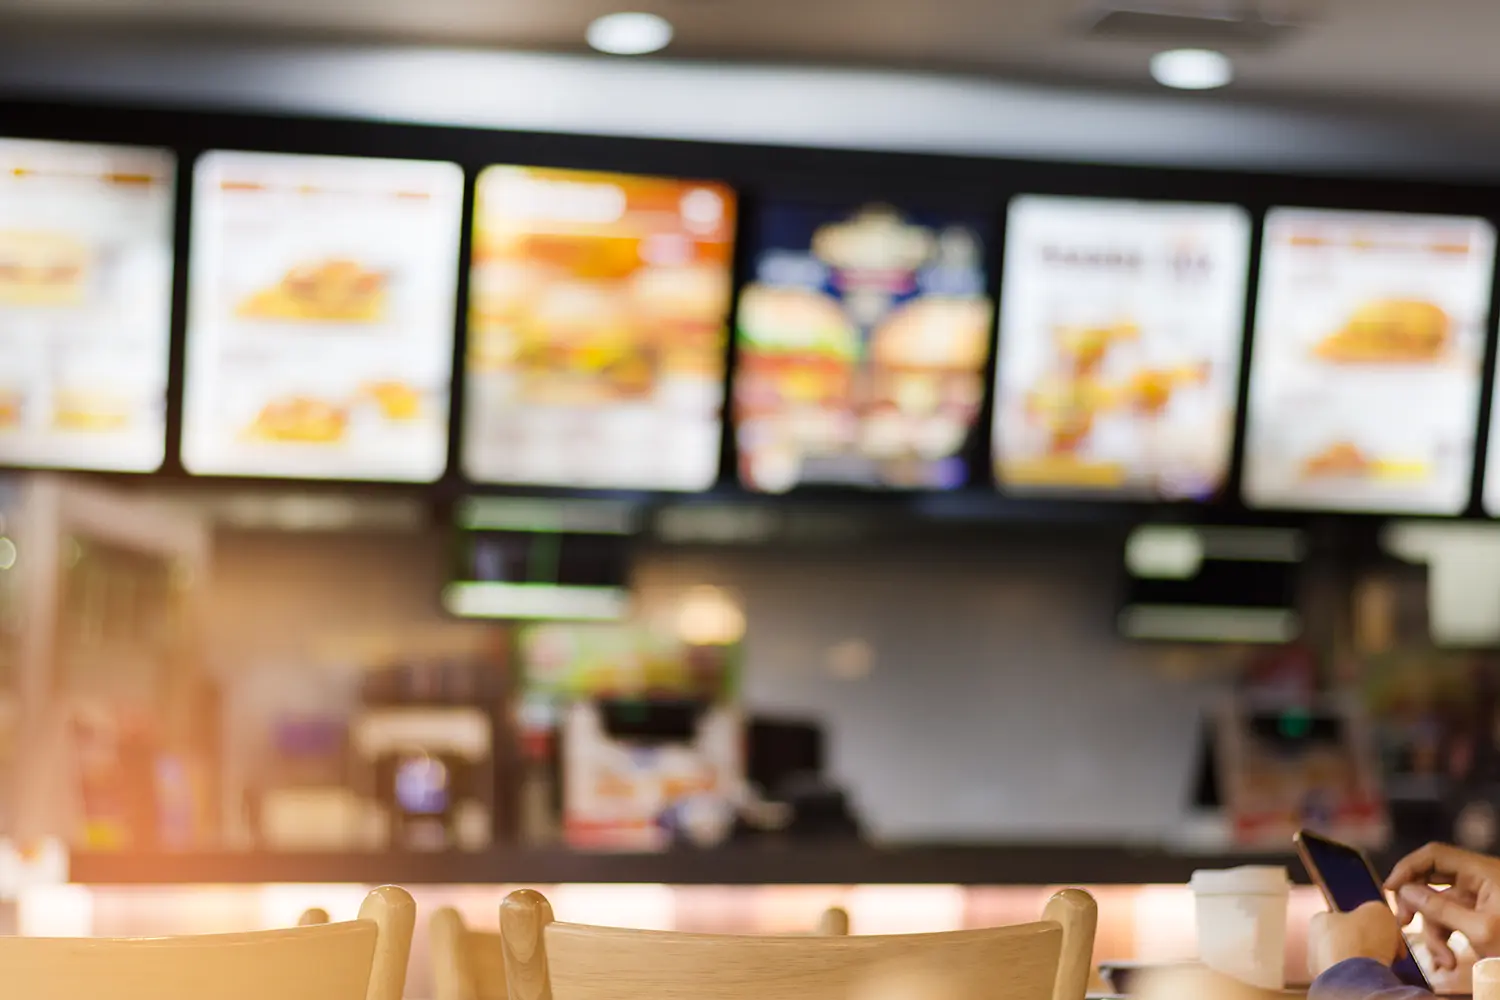 Blurred image of fast food restaurant, use for defocused background.